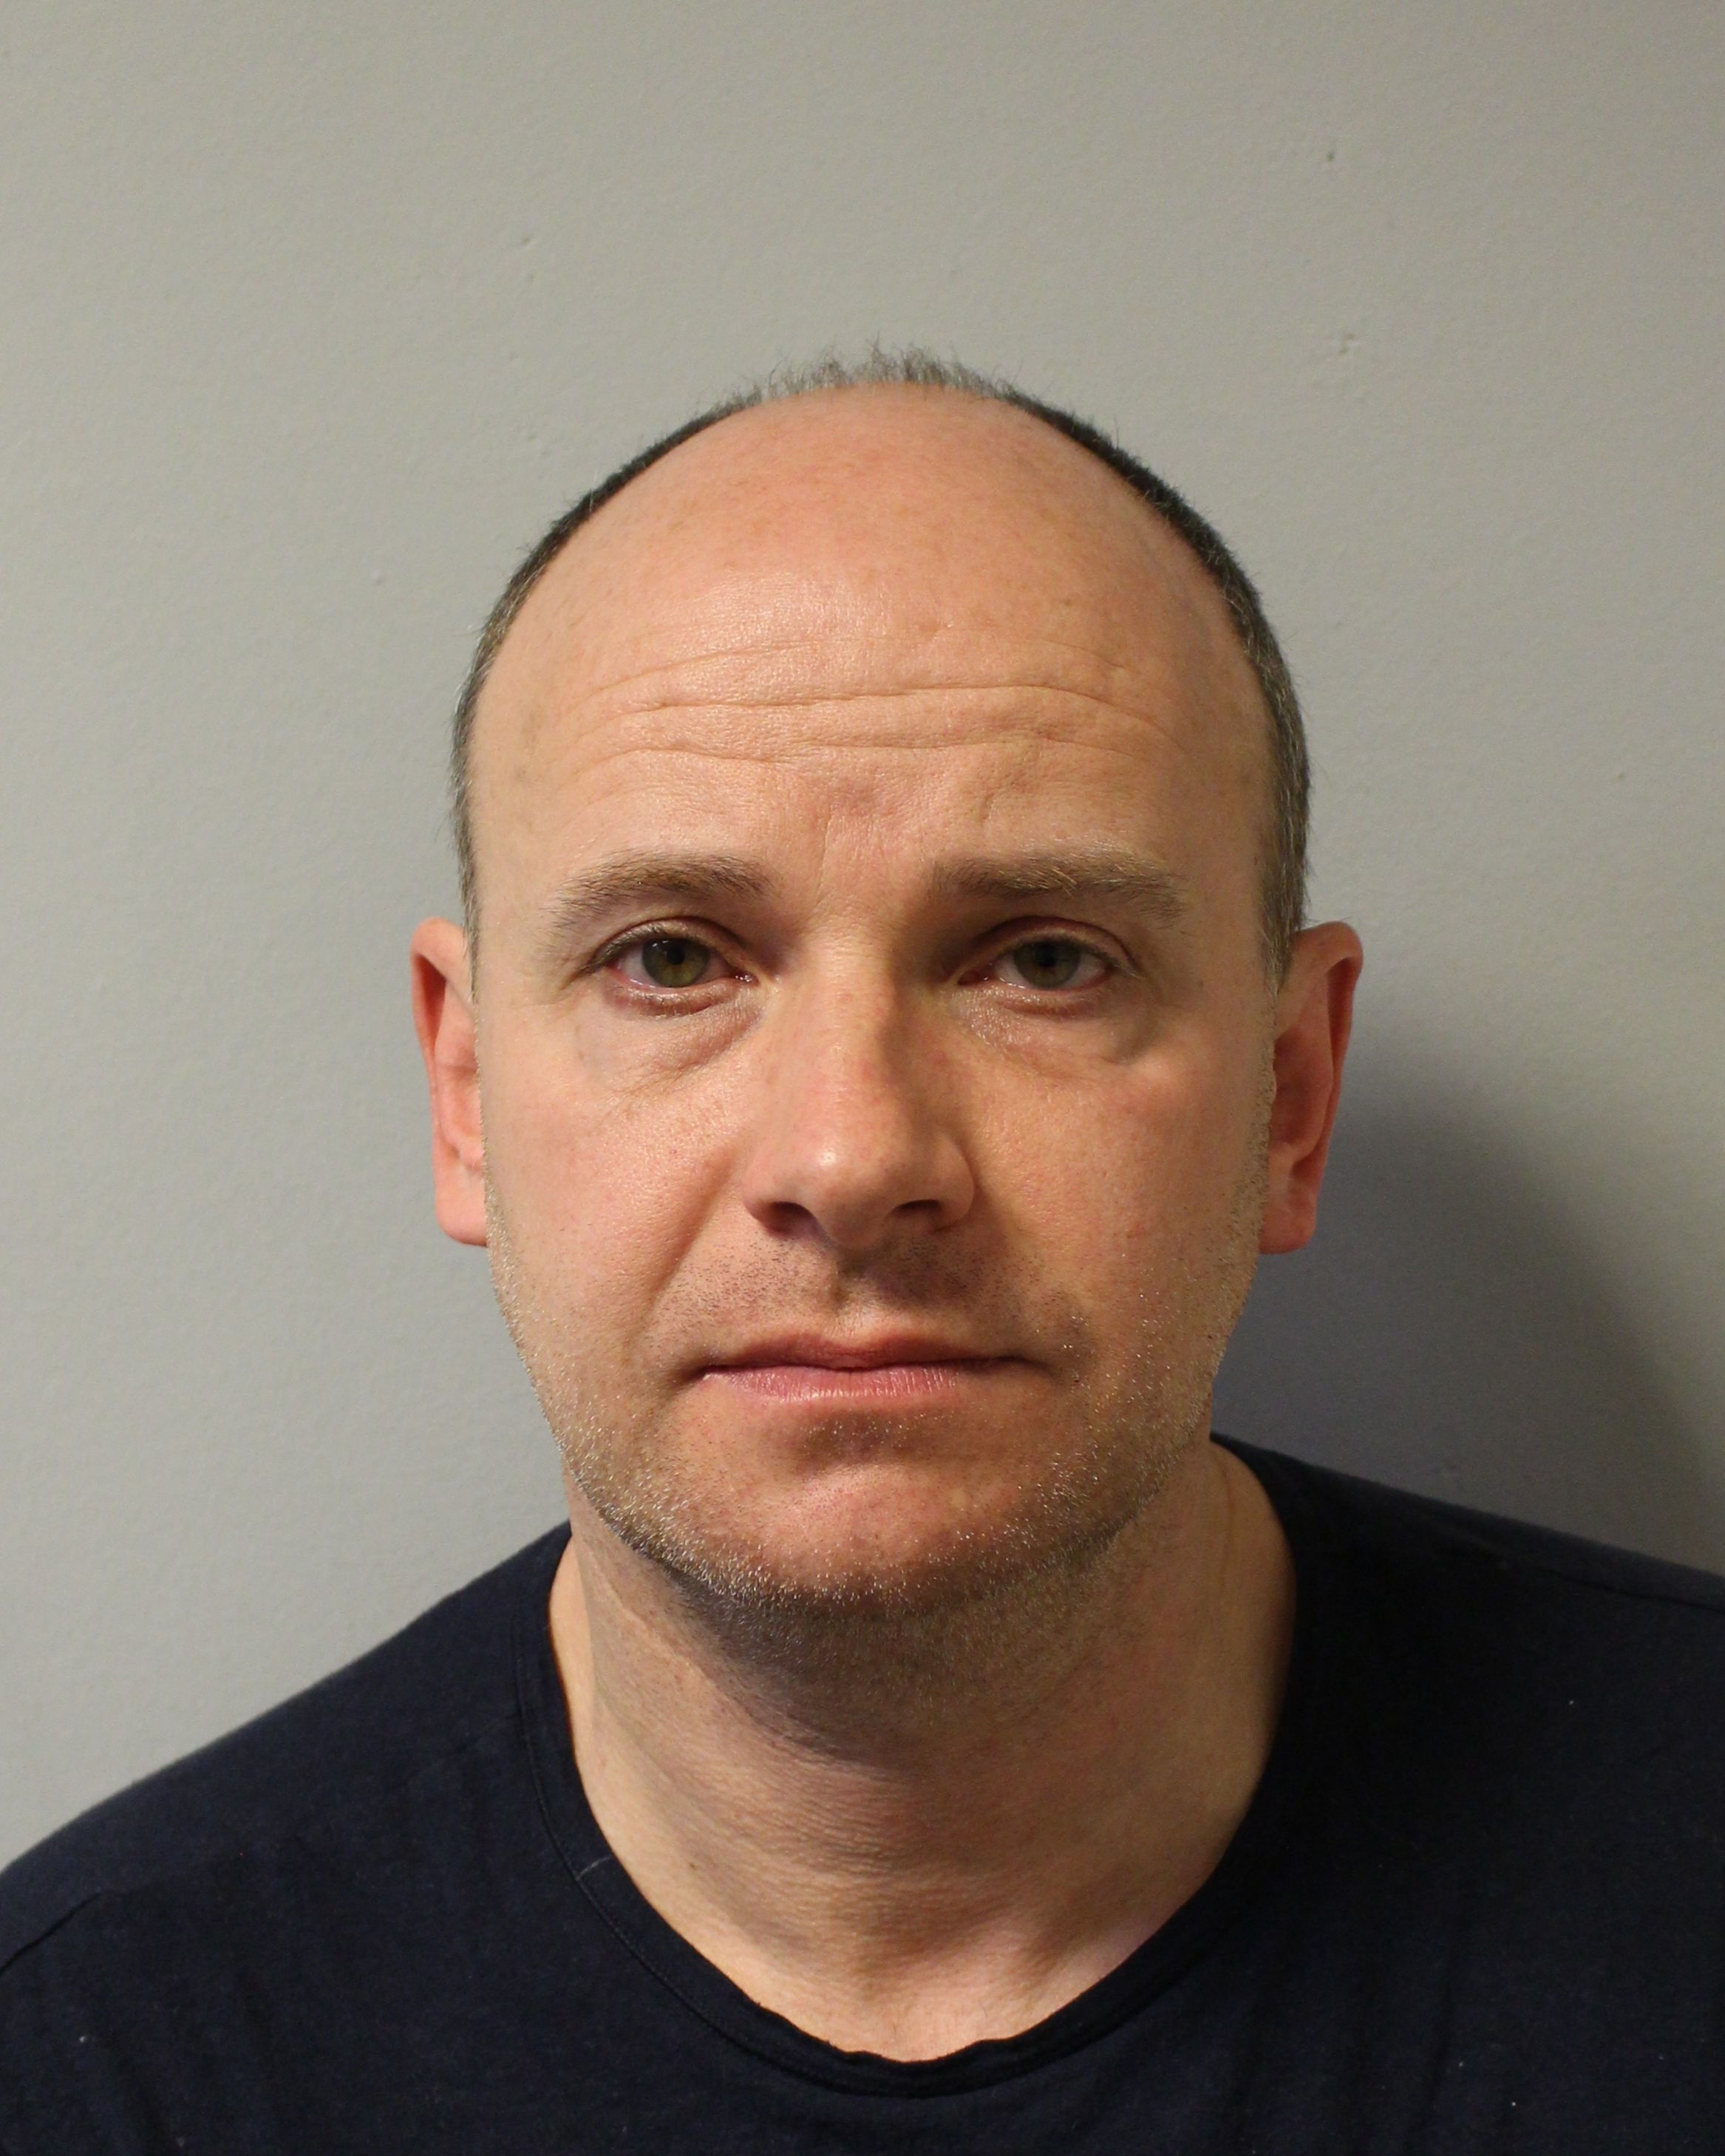 David Spanton's mugshot released by the Metropolitan Police